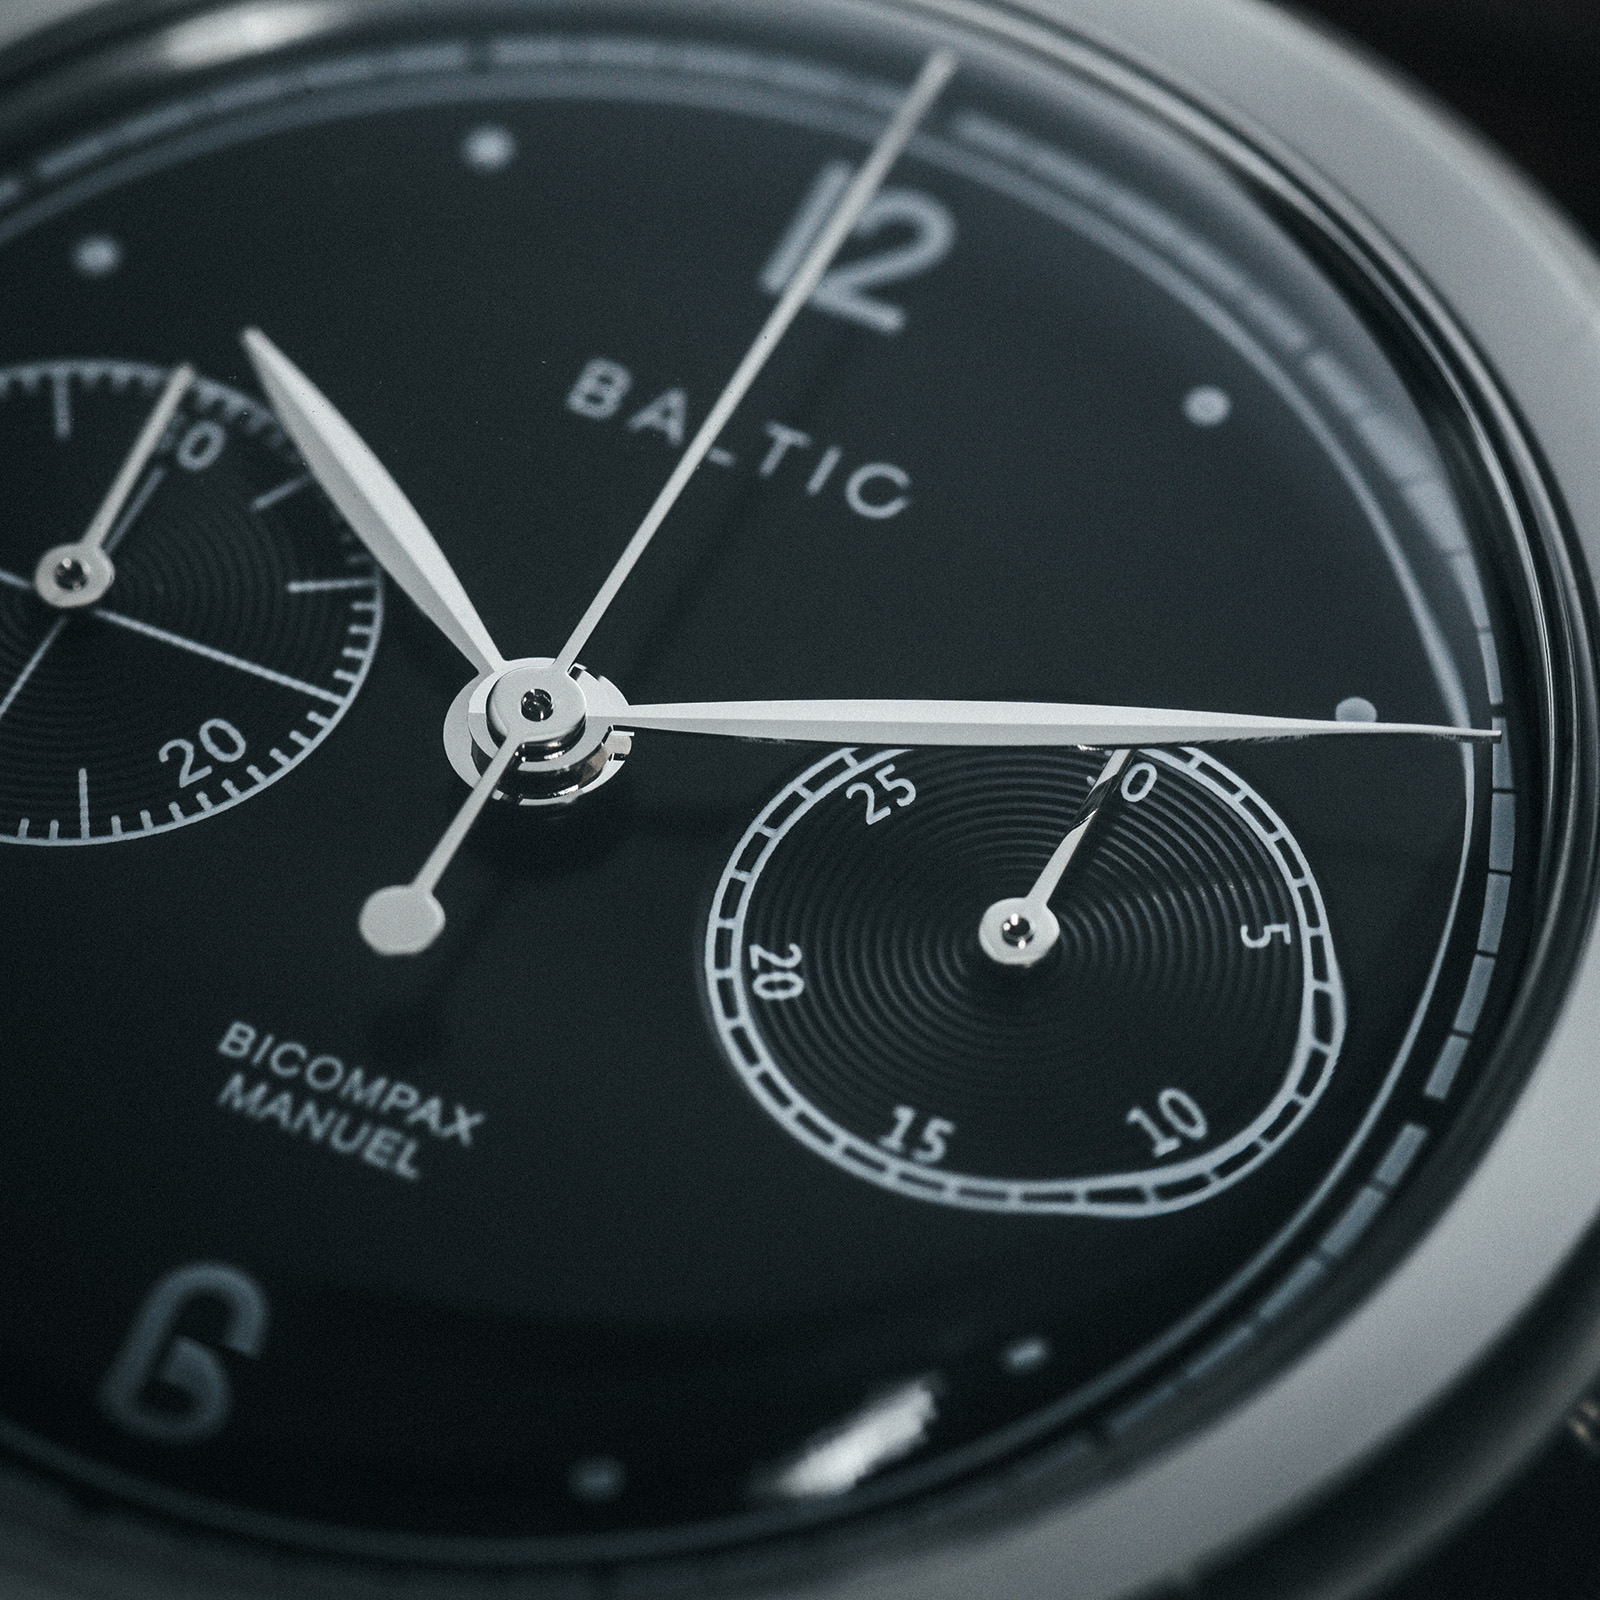 Baltic Watches BIMCOMPAX 001 Black dial